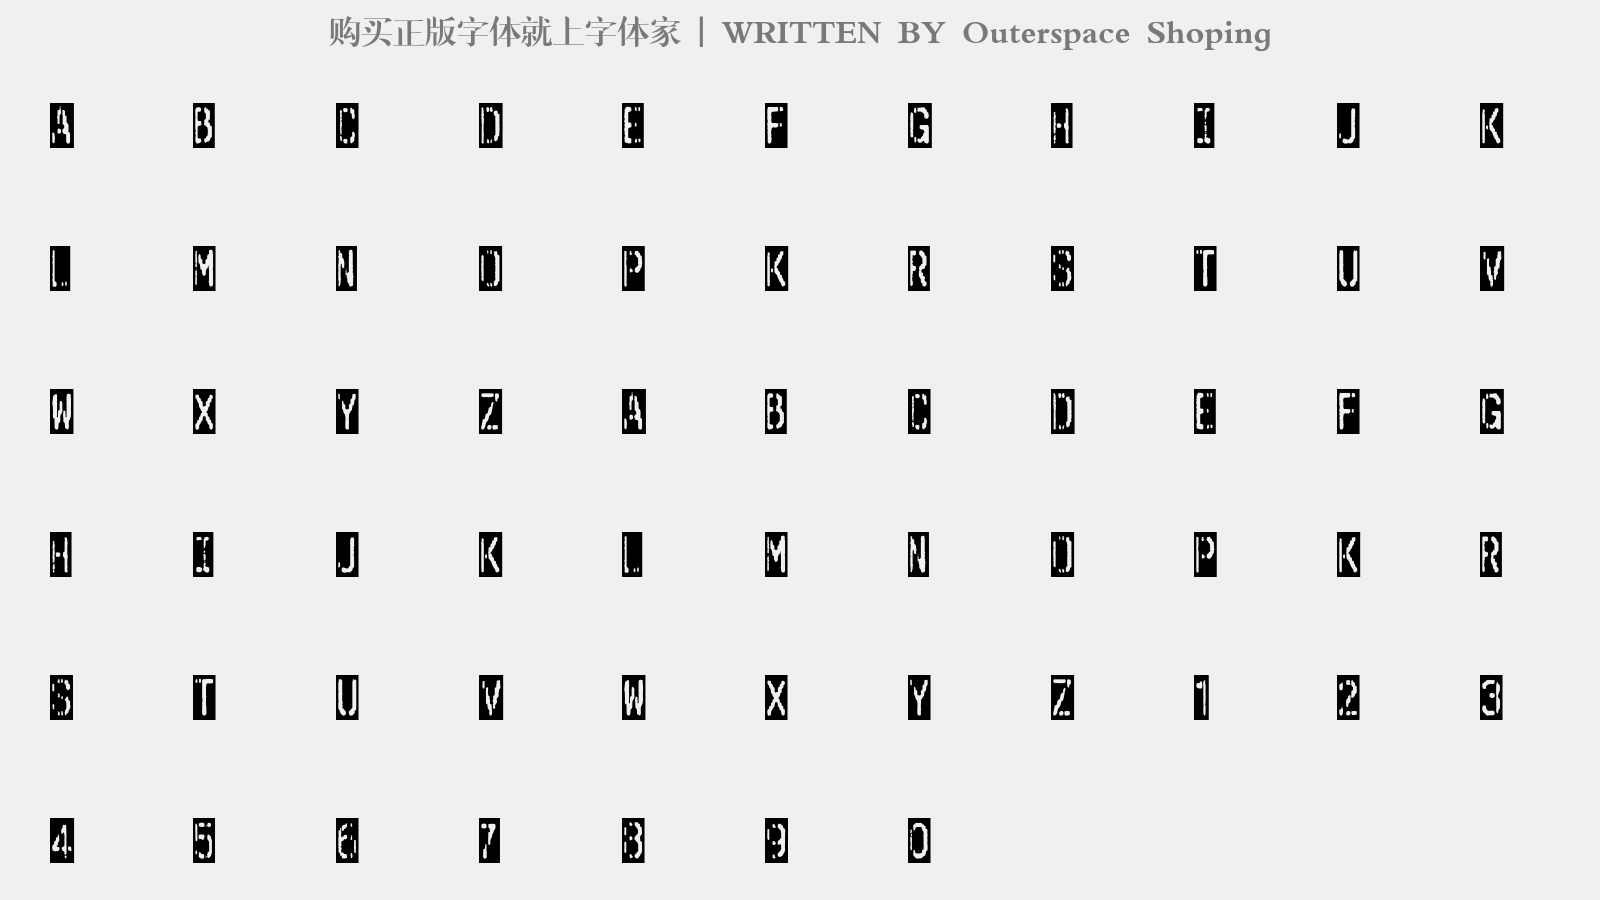 Outerspace Shoping - 大写字母/小写字母/数字